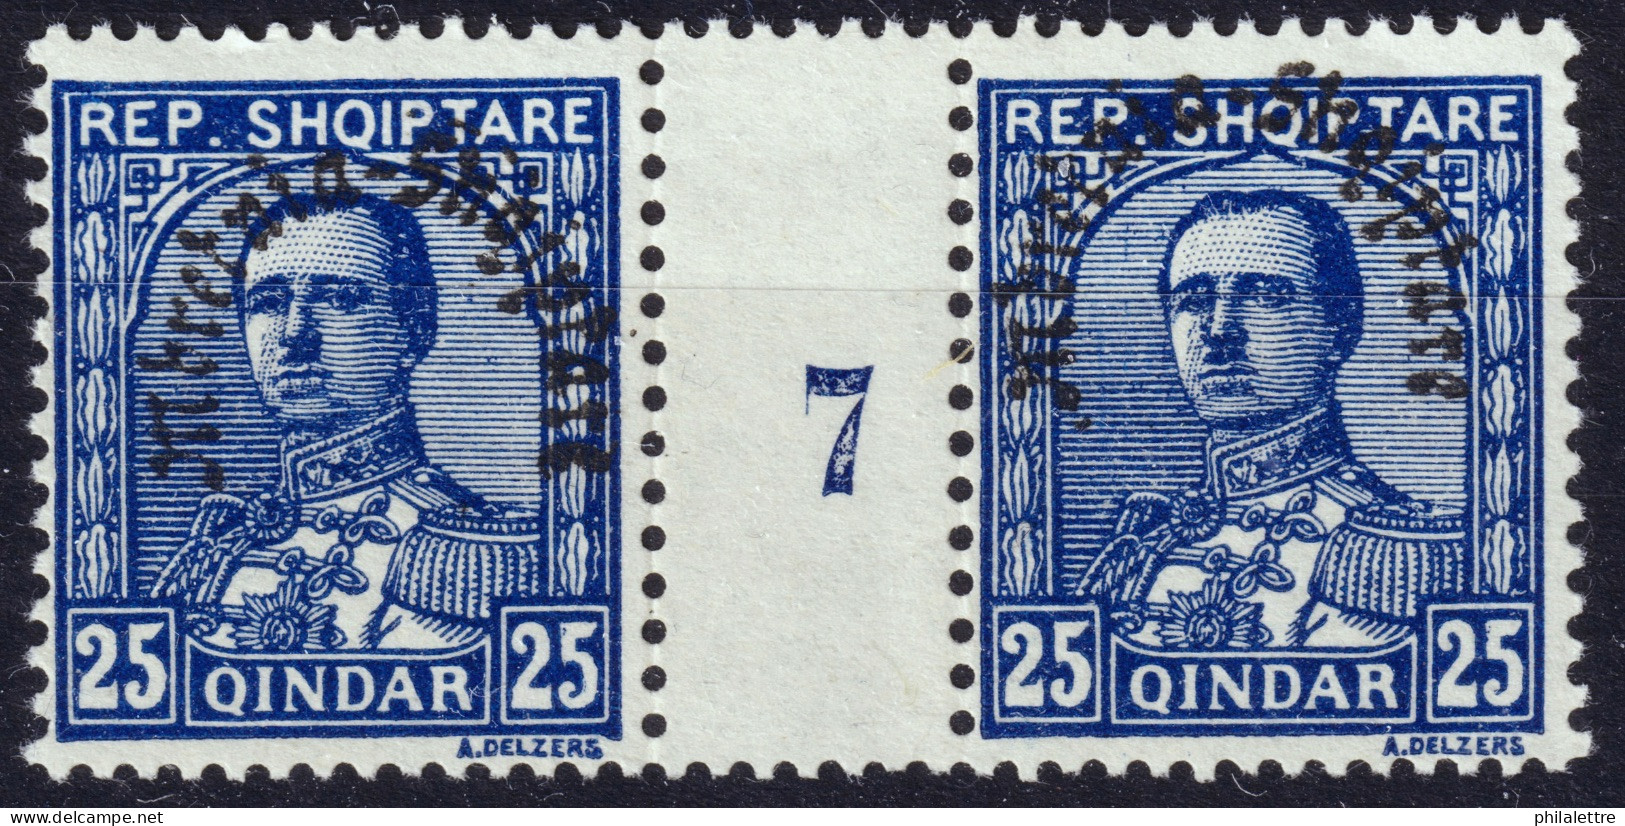 ALBANIE / ALBANIA - 1928 Mi.193 25Q. Bleu / Blue - Paire Millésime / Interpane Pair (7 For 1927) - No Gum / Sans Gomme - Albanie